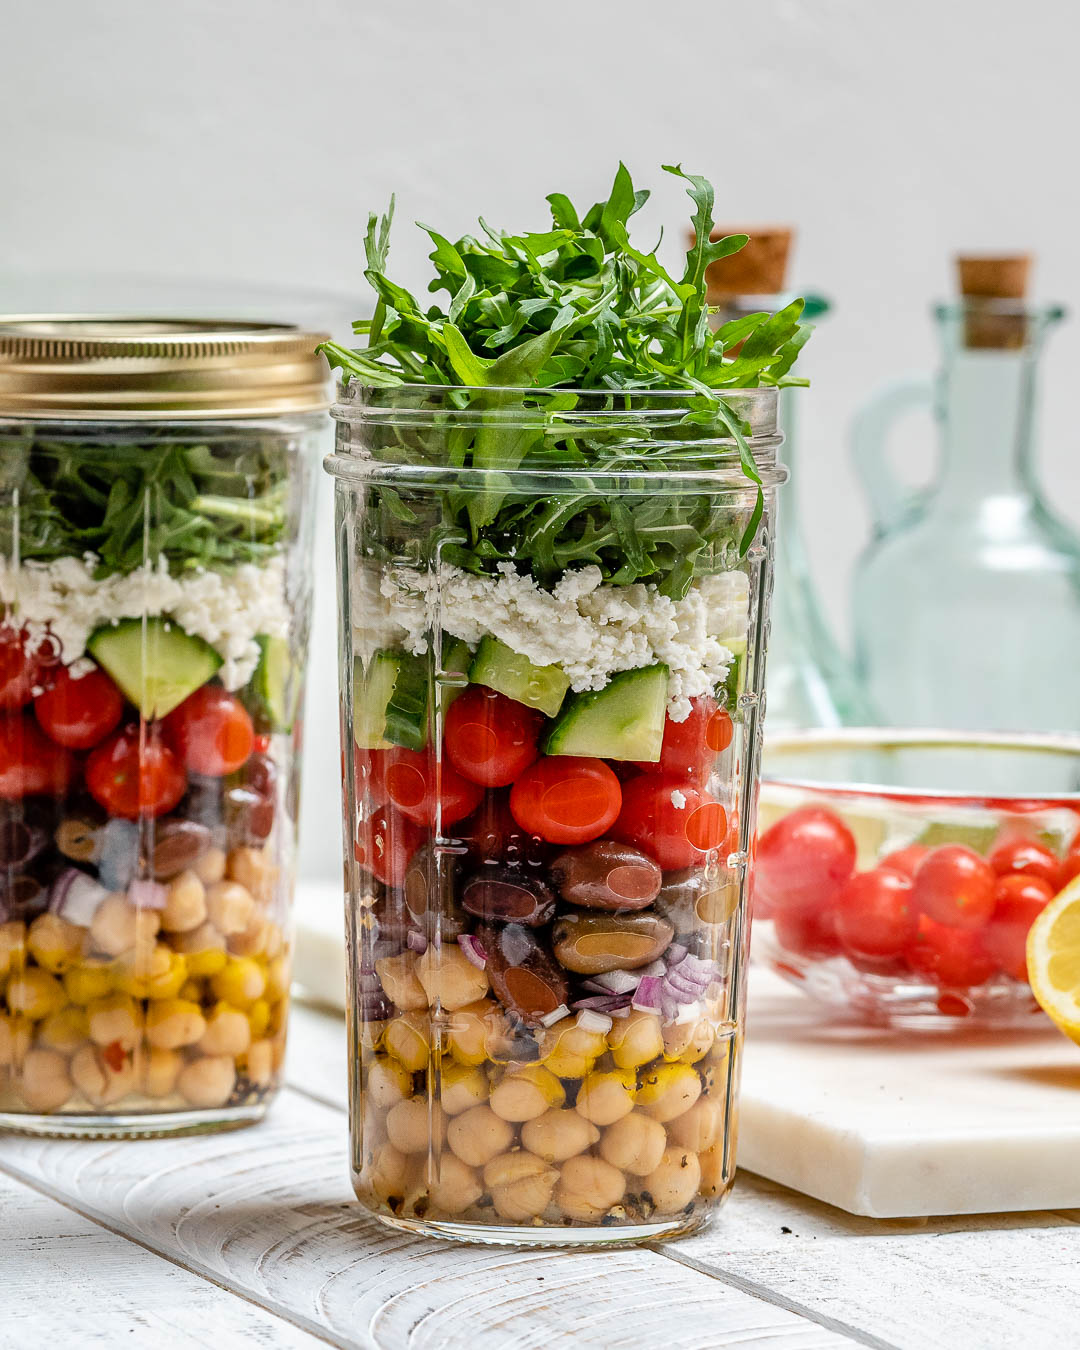 Greek Chicken Salad In Mason Jars (Meal Prep) – Melanie Cooks